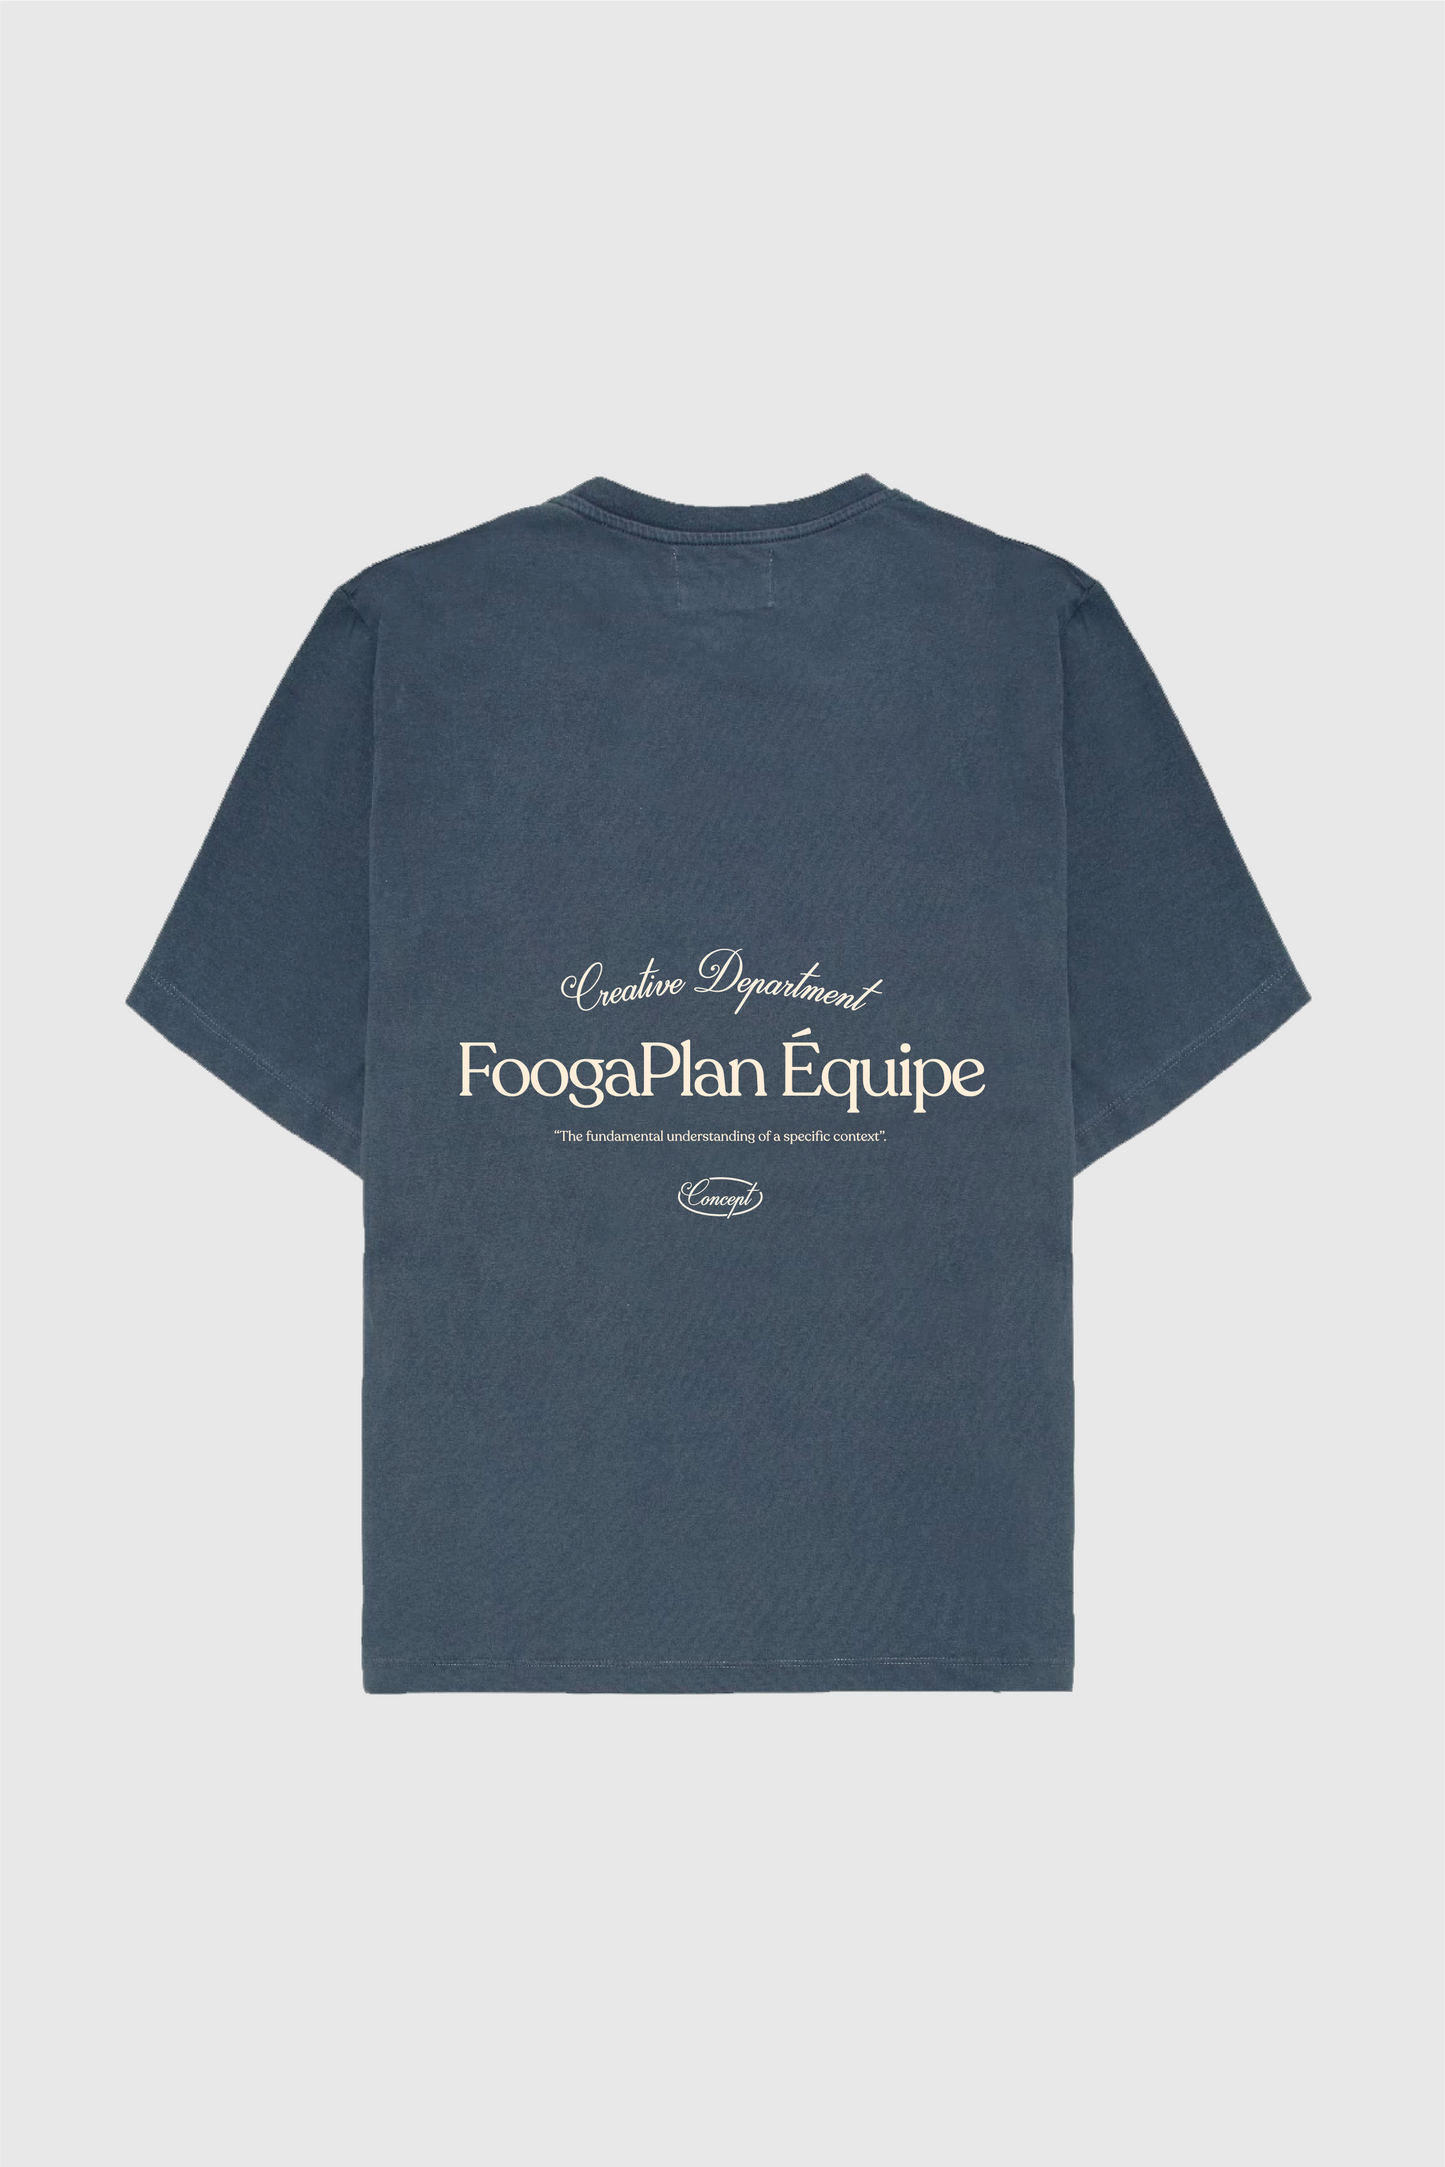 Équipe FoogaPlan